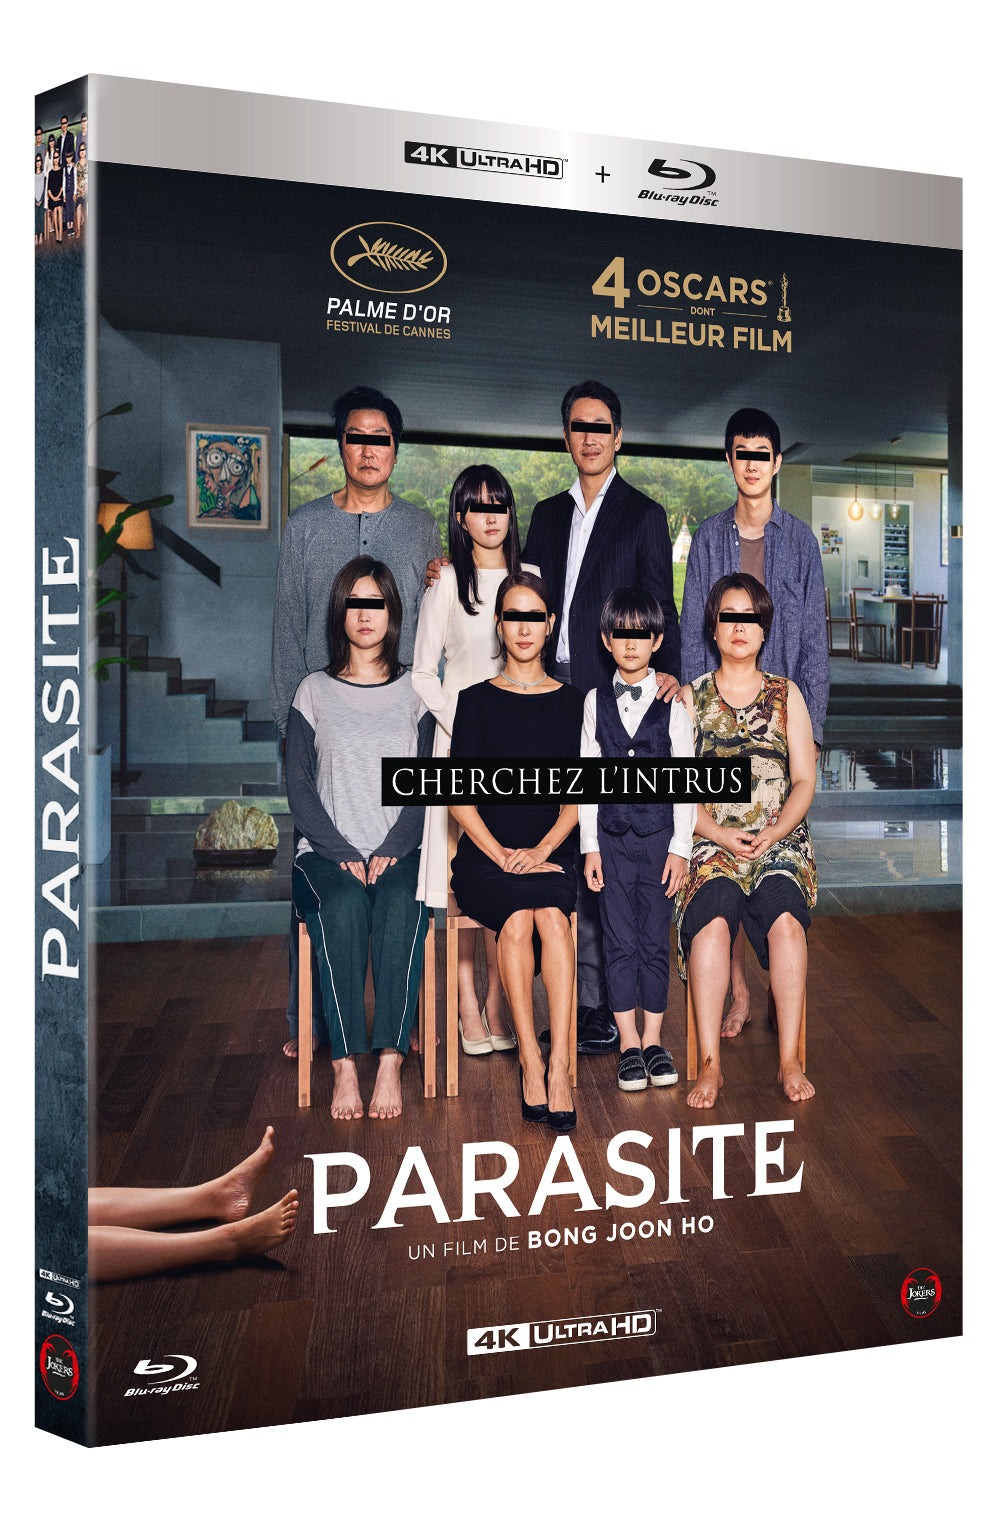 Combo (Blu-Ray 4K + Blu-Ray) "Parasite"